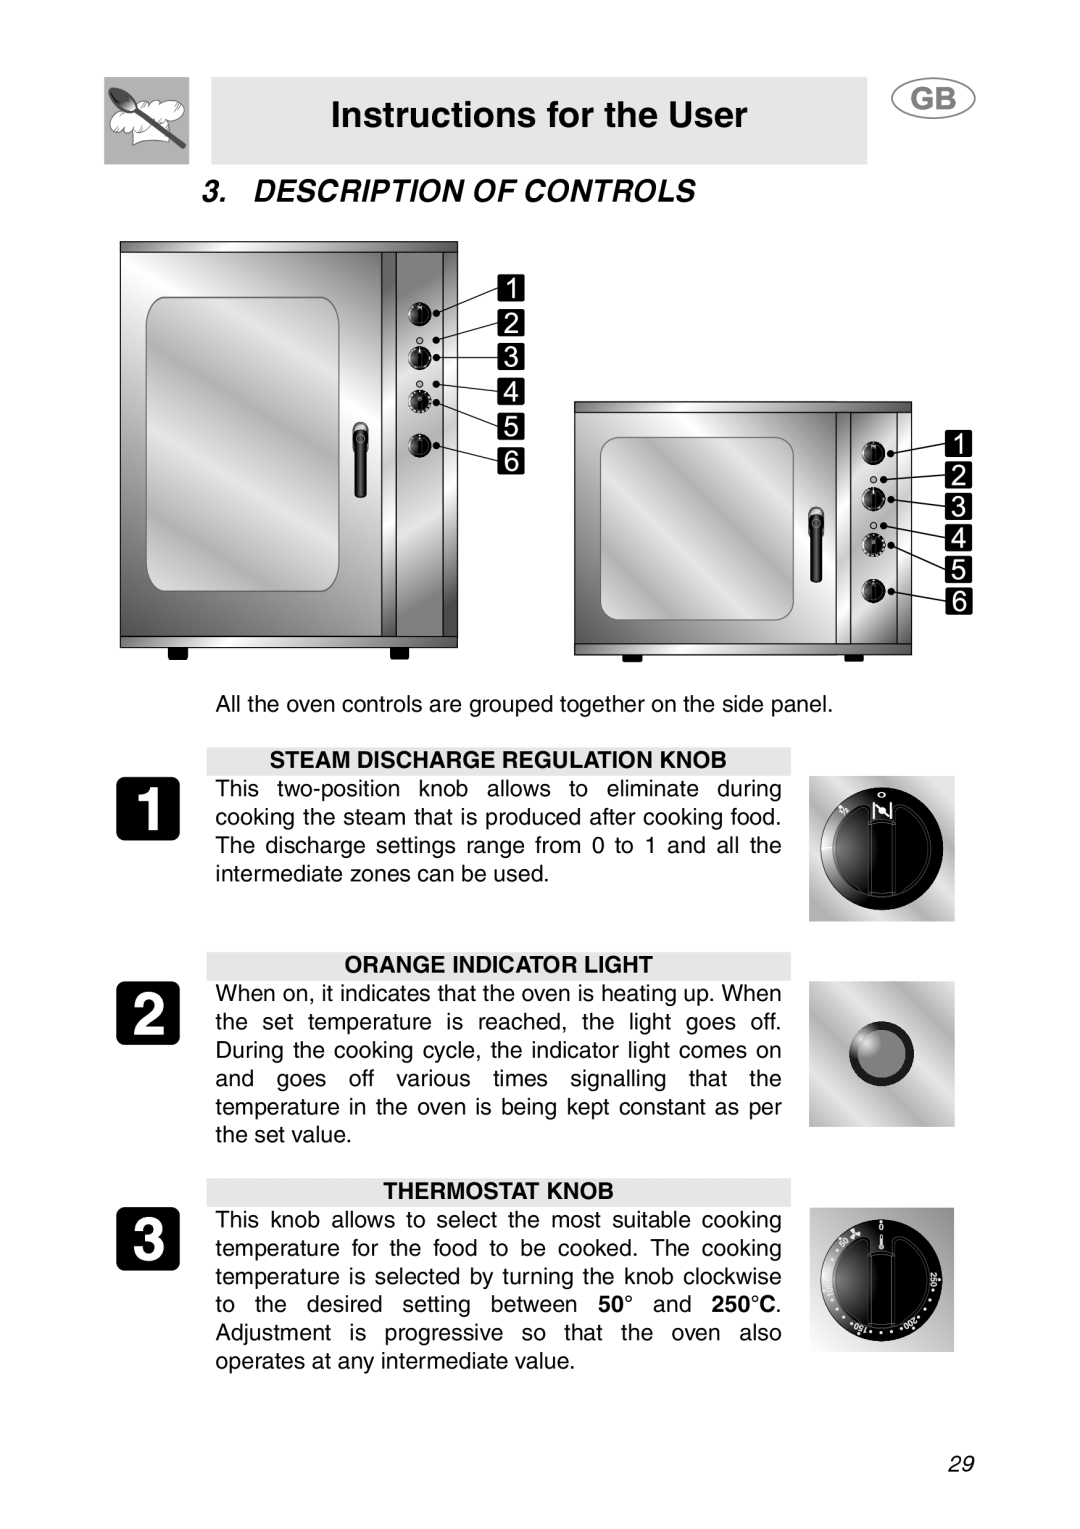 Smeg ALFA341XM Instructions for the User, Description Of Controls, Steam Discharge Regulation Knob, Orange Indicator Light 